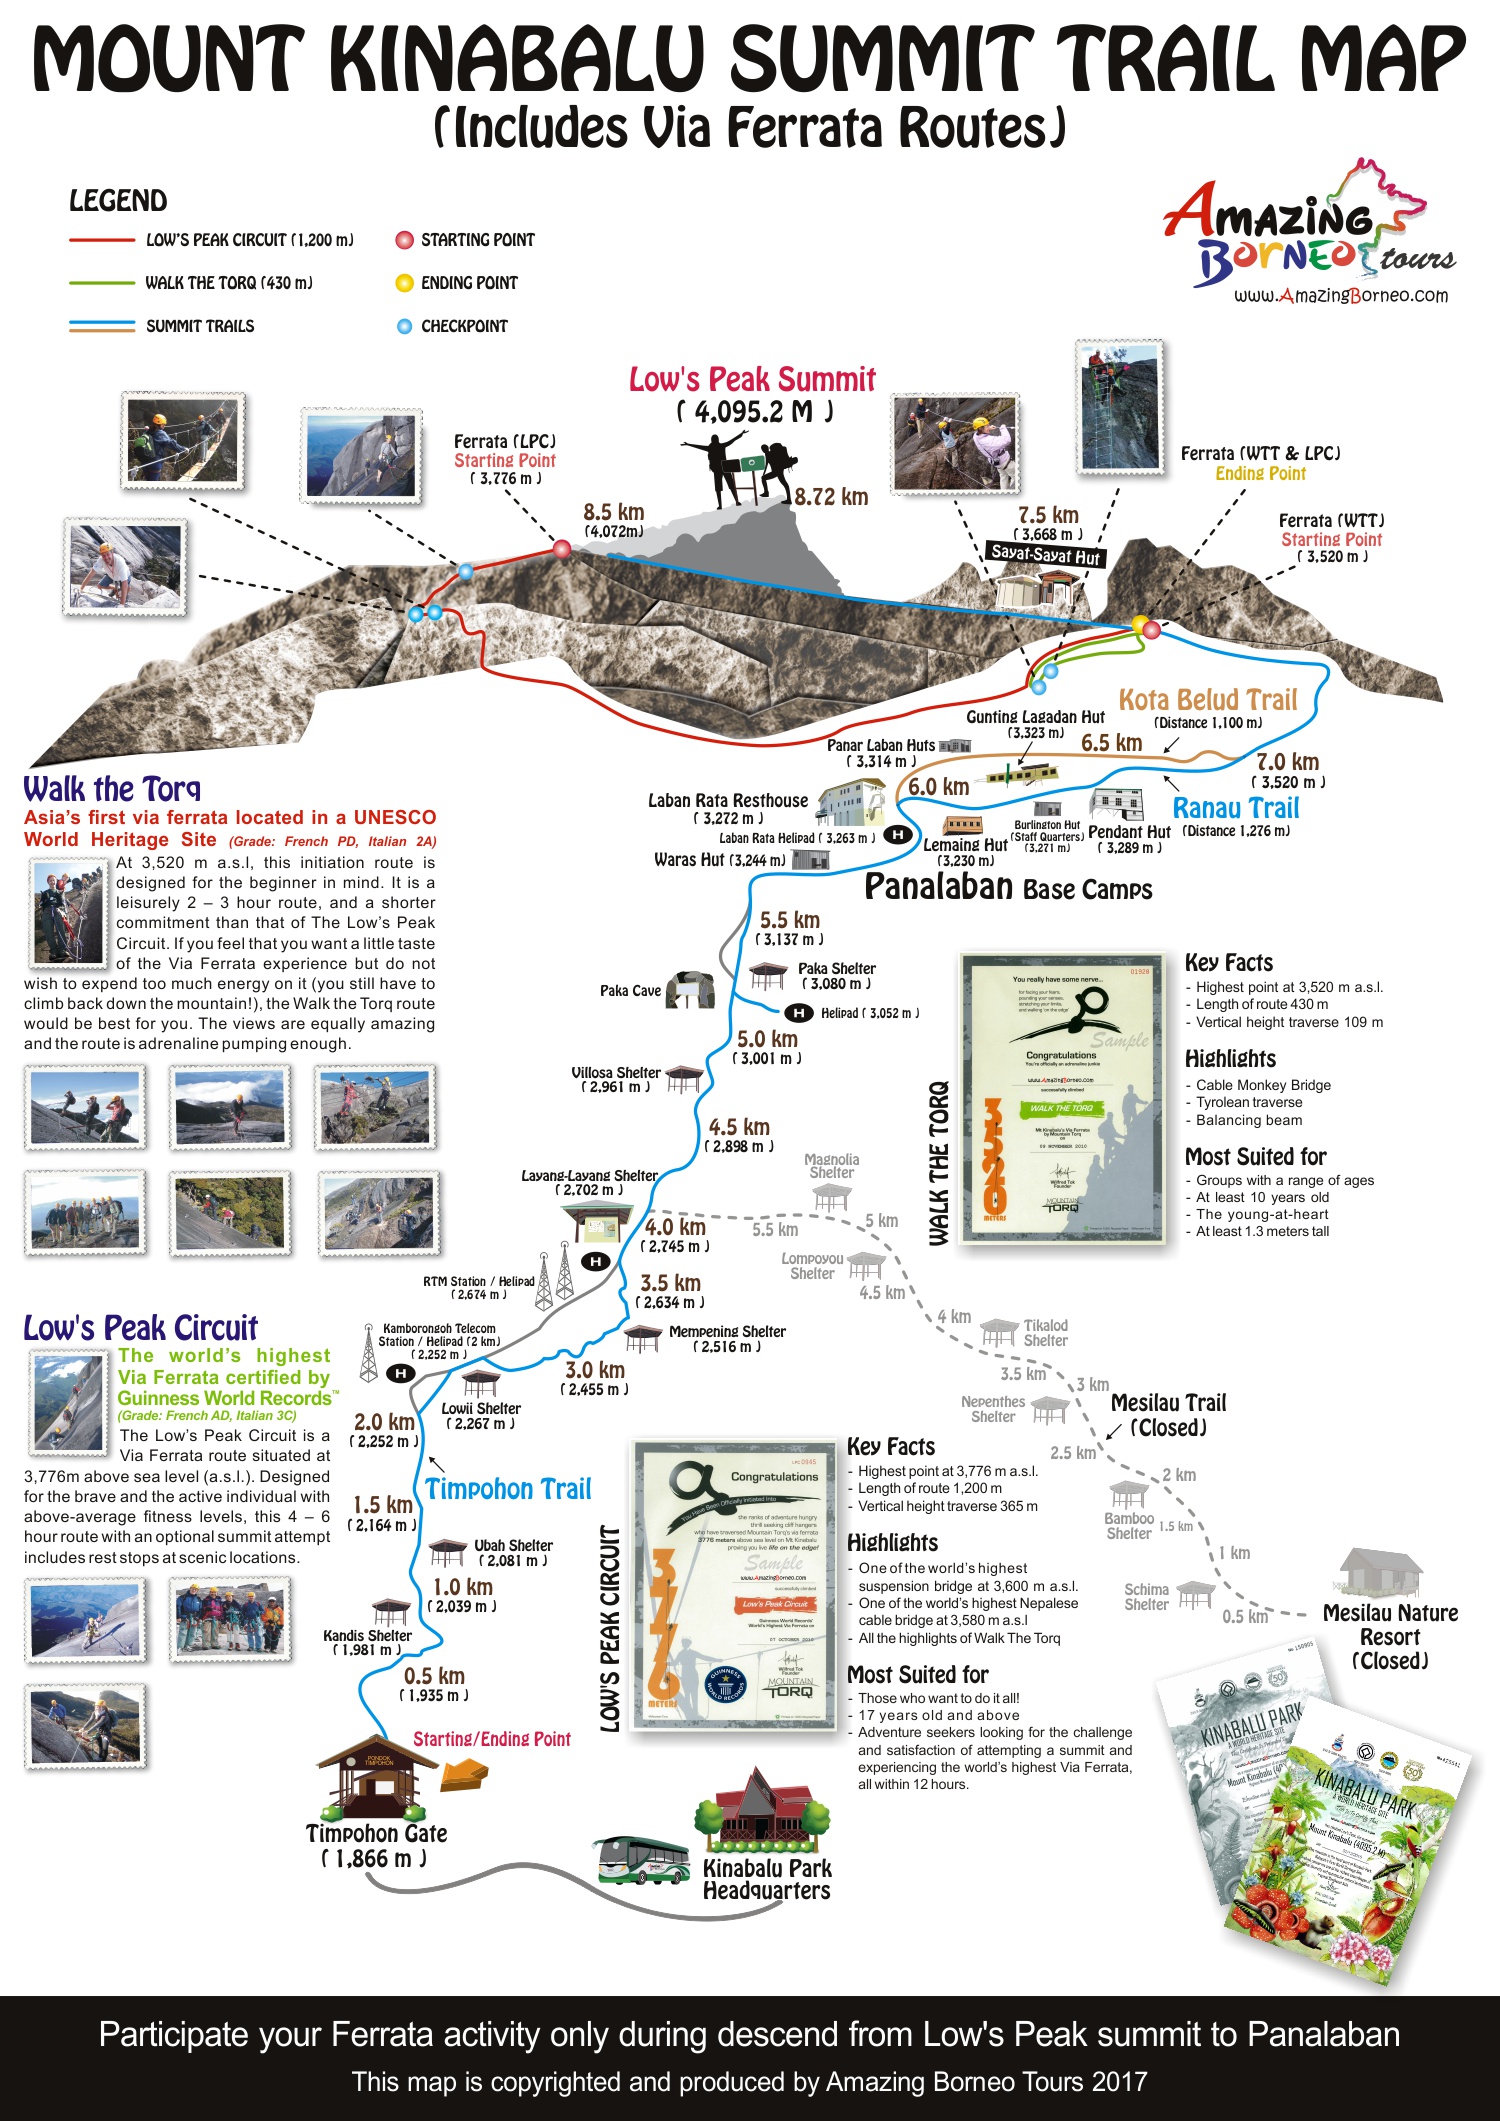 Mount Kinabalu Summit Trail Map with Via Ferrata Routes